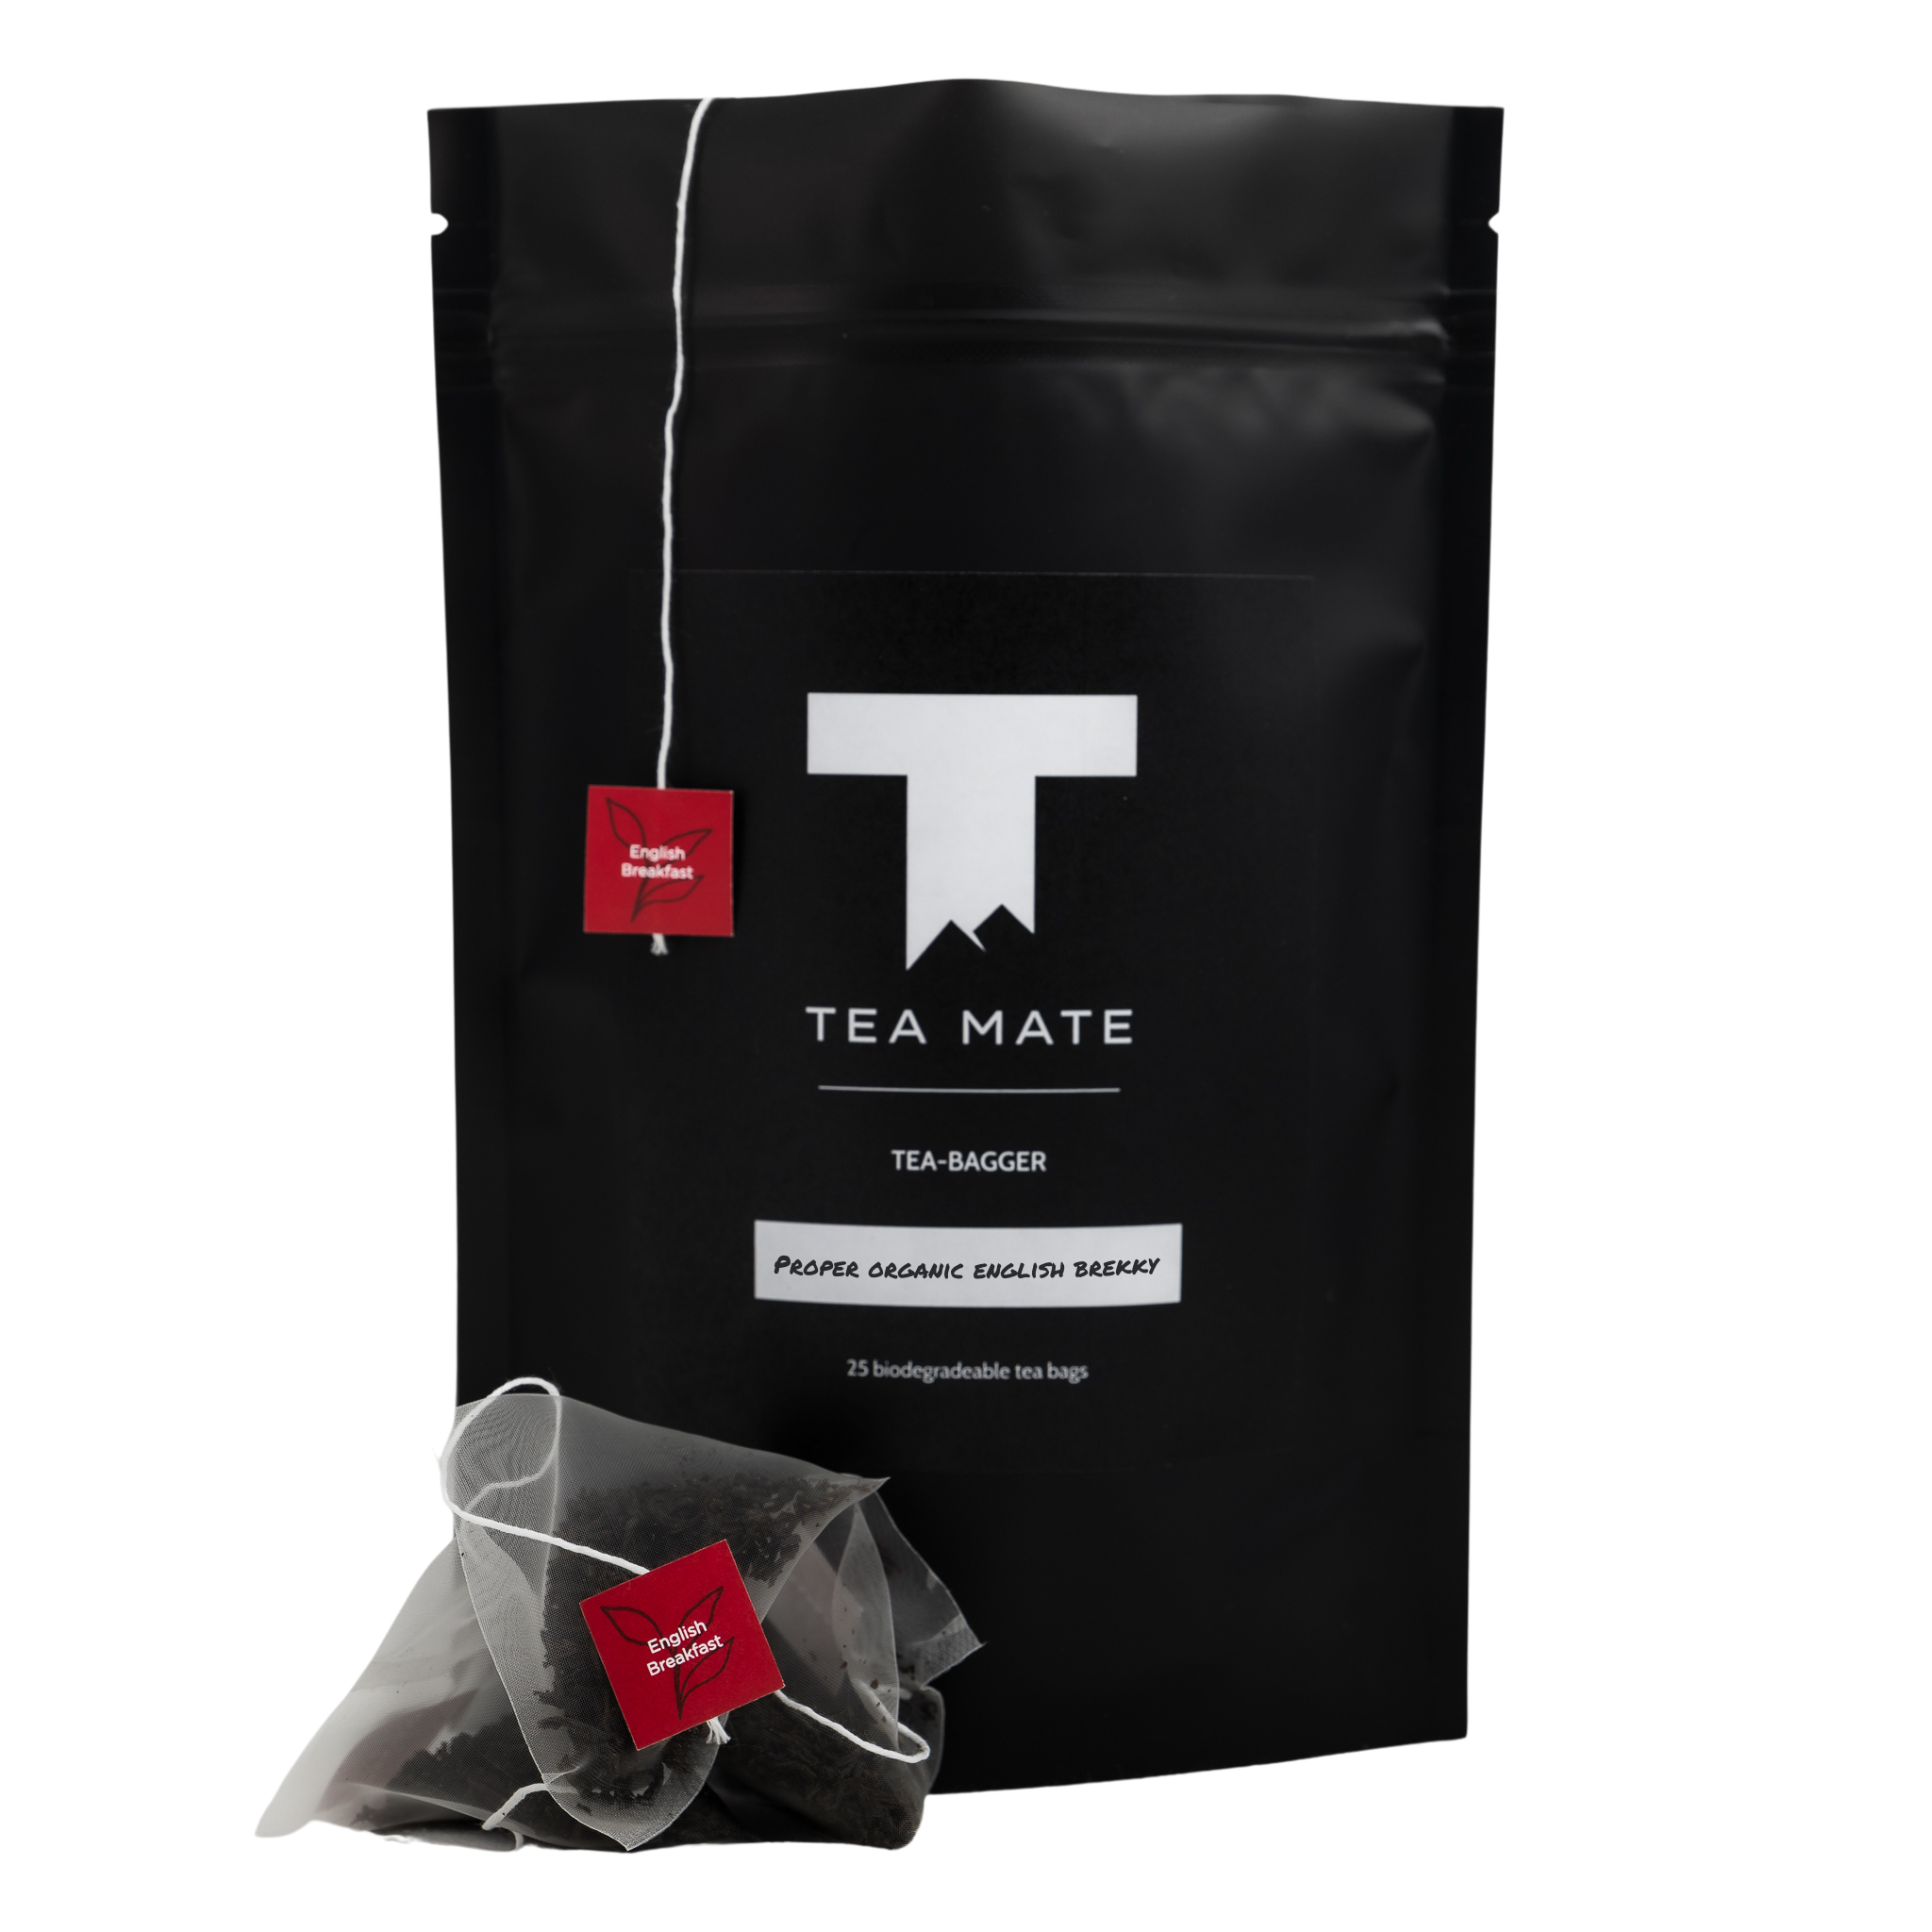 TEA MATE Proper Organic English Breakfast Tea (25 Premium Biodegradable Tea Bags)